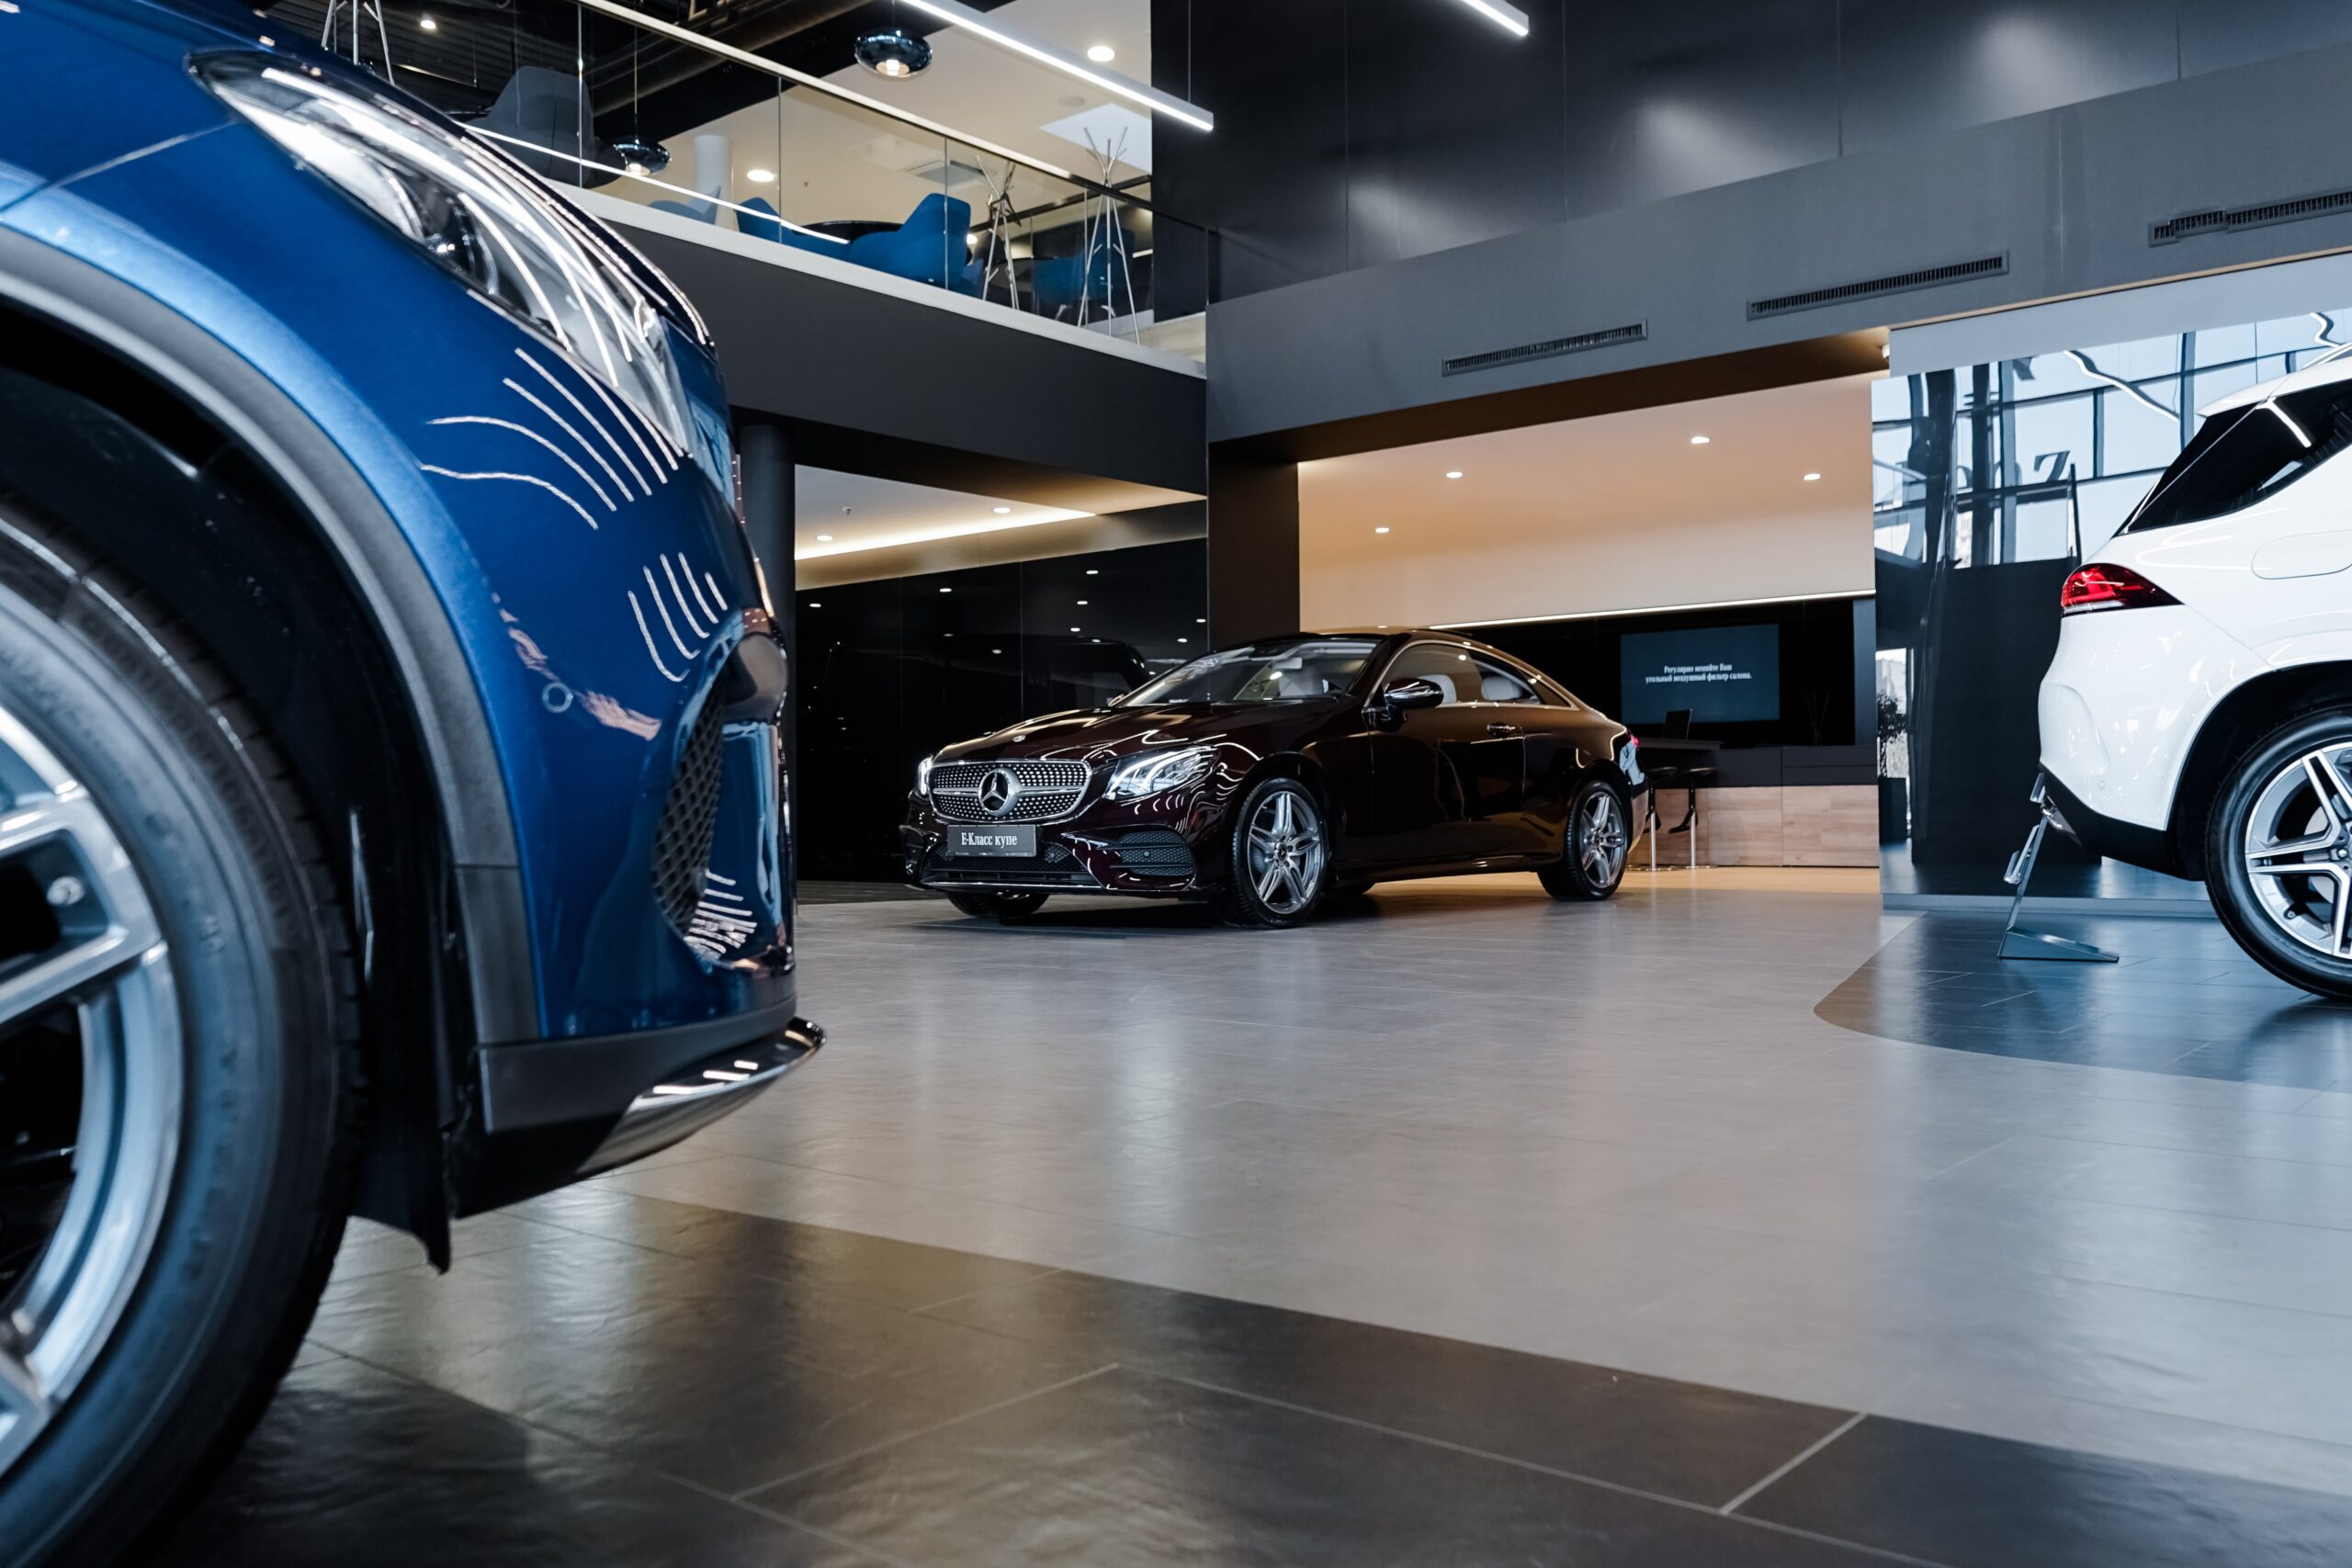 car dealership main floor with cars on display